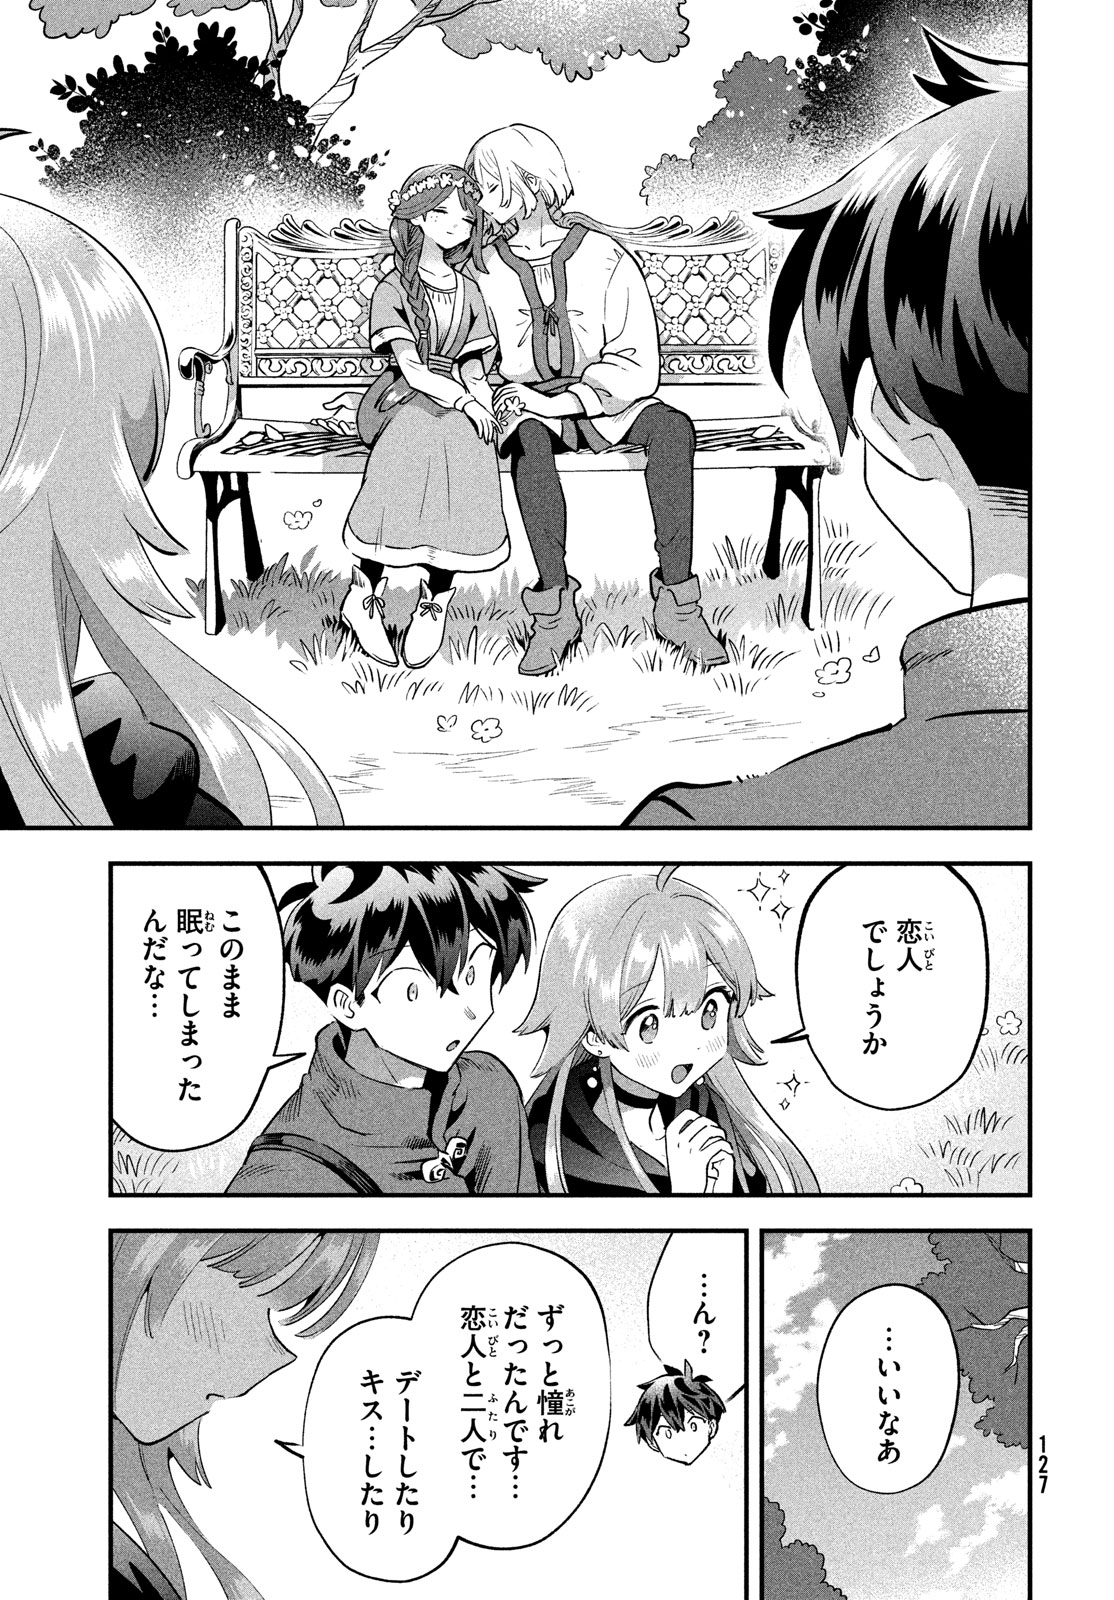 7-nin no Nemuri Hime - Chapter 41 - Page 7